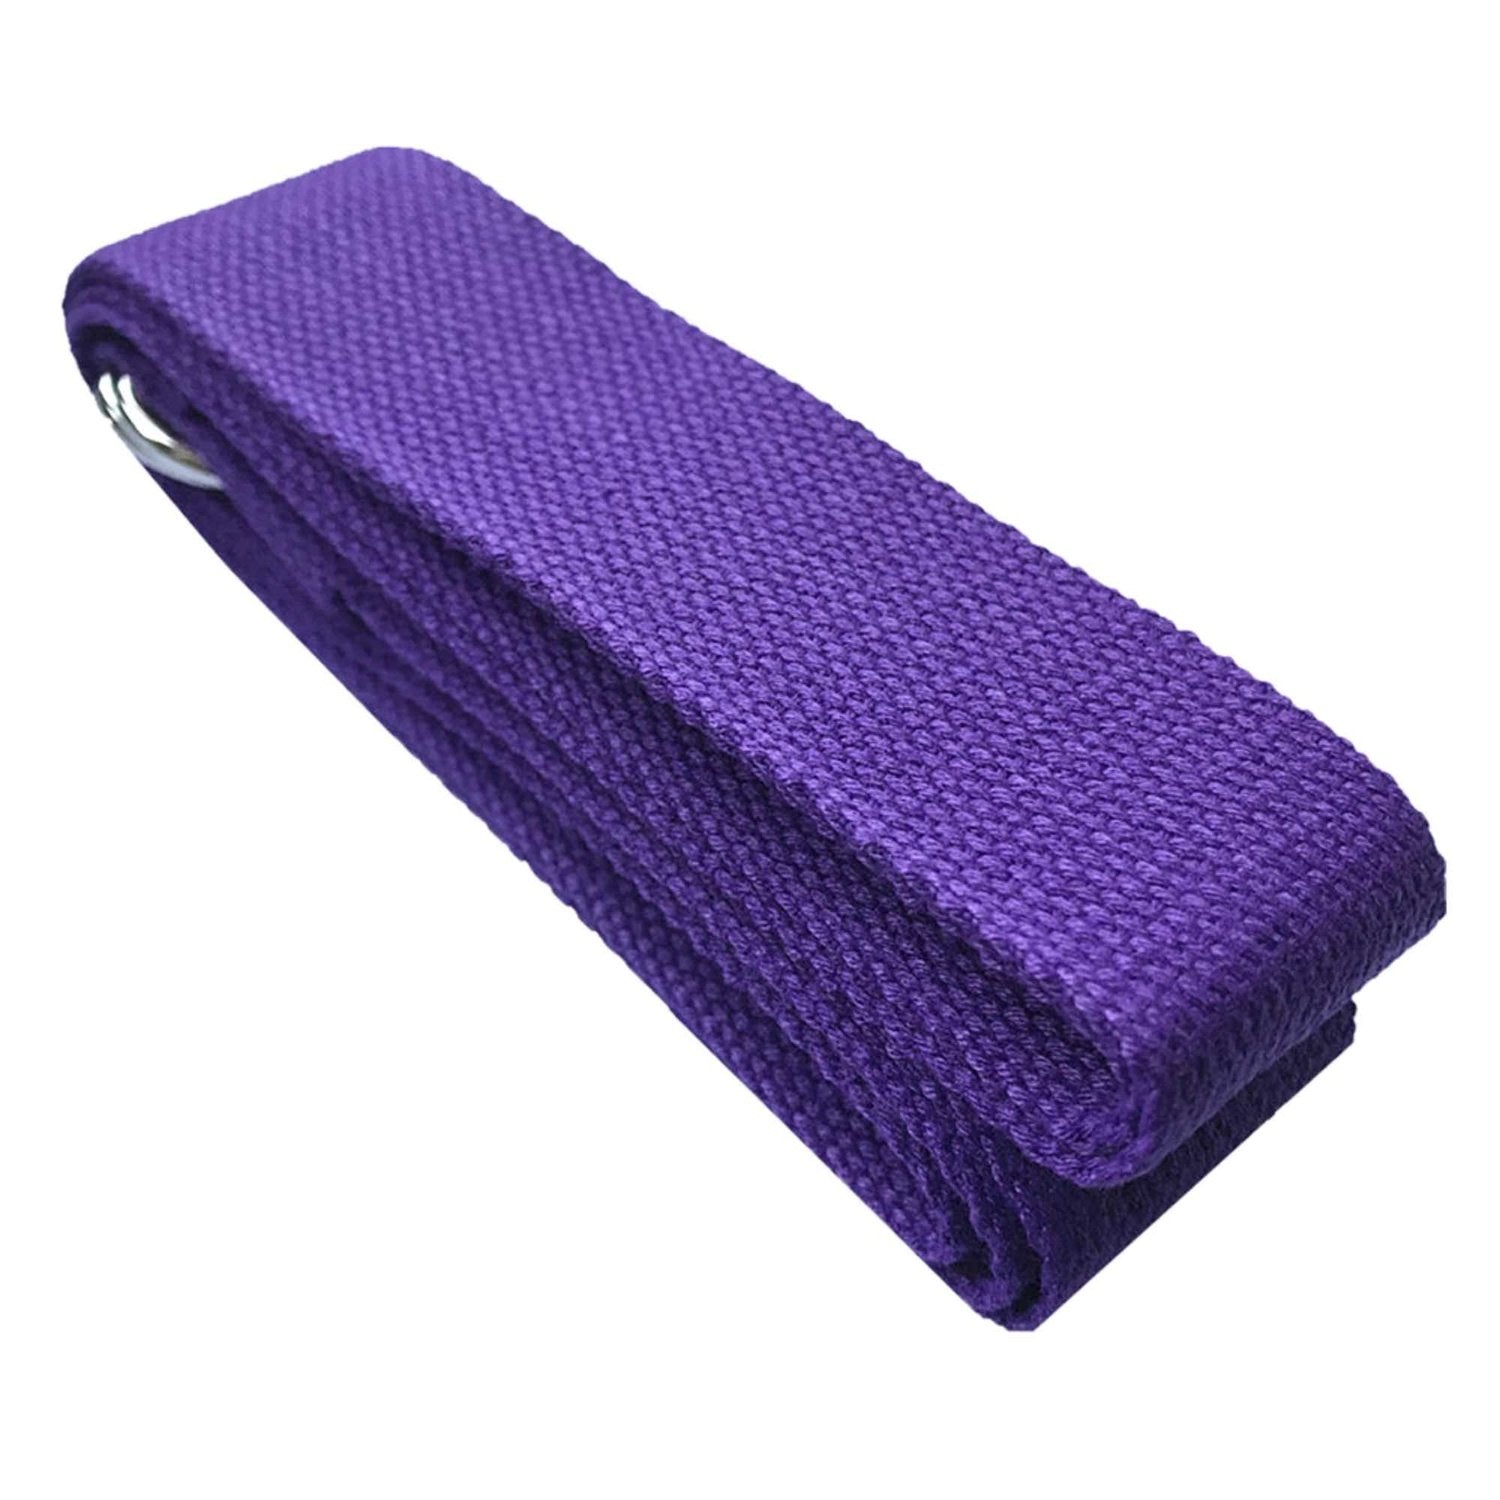 HighPowered Yoga Strap Violett kaufen bei HighPowered.ch